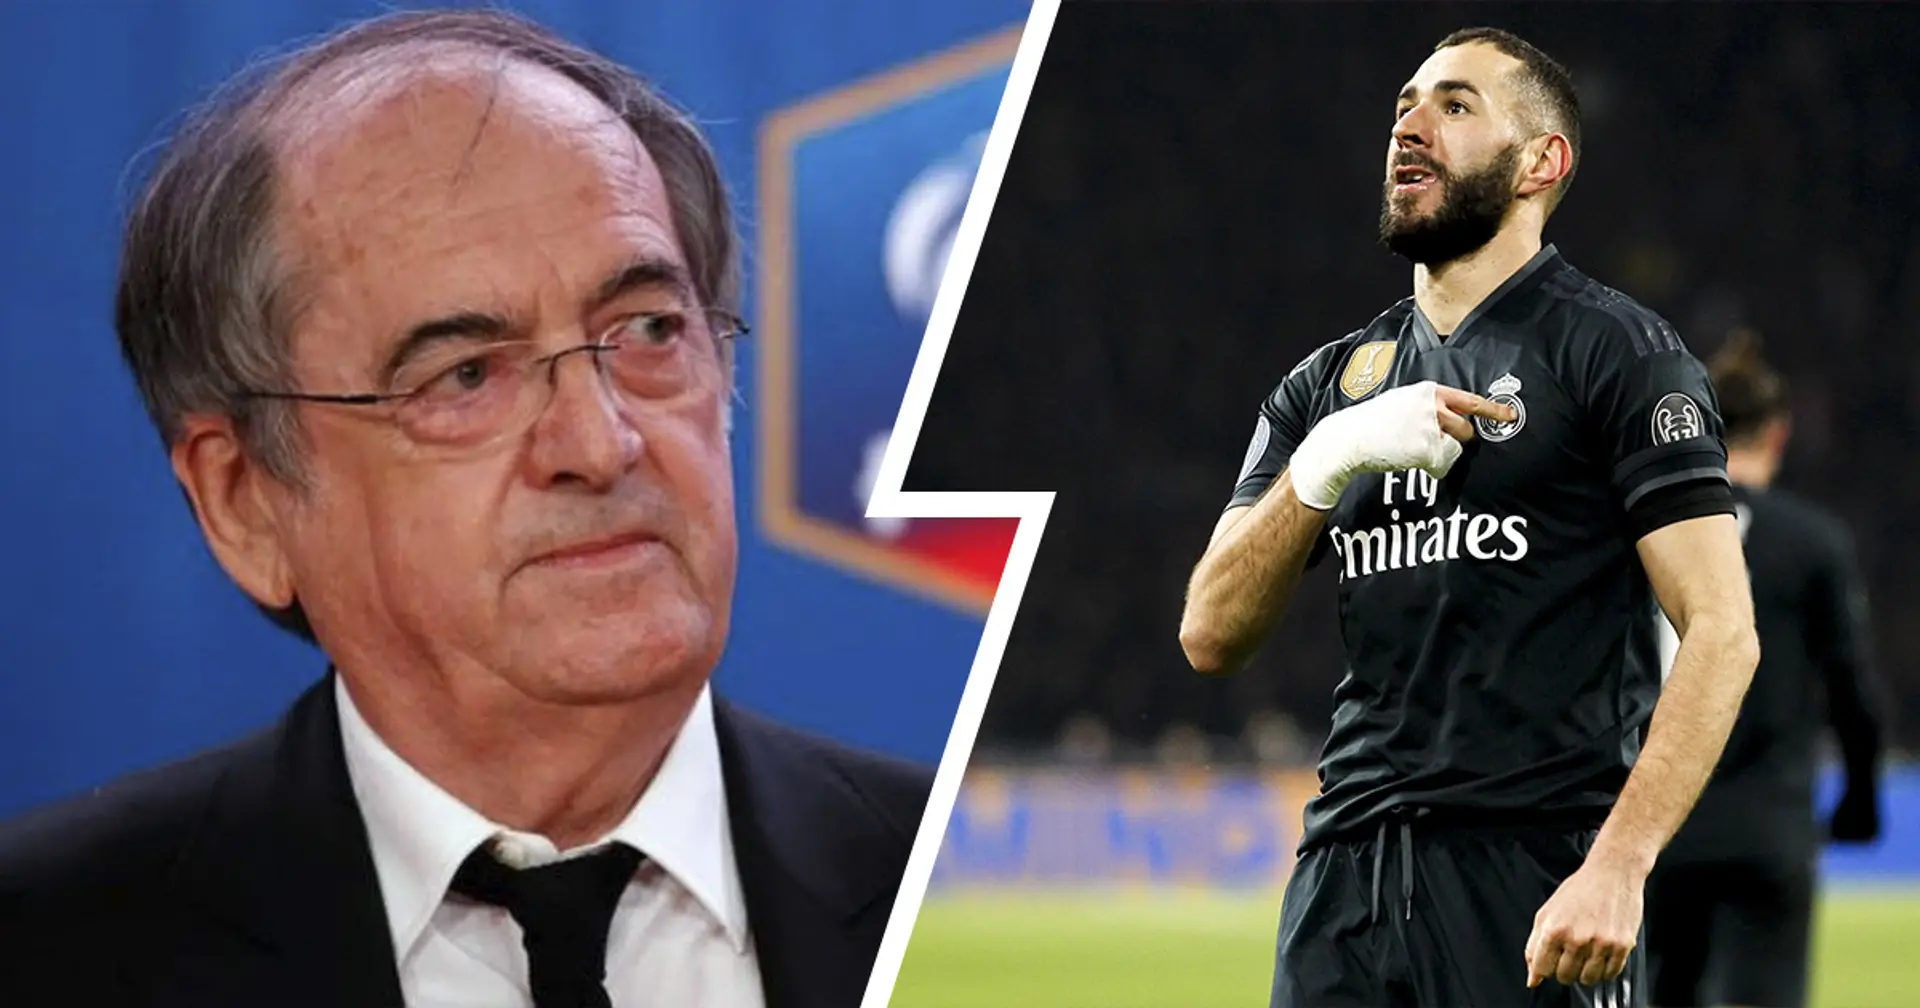 The president who announced Benzema's ban from international football agrees Karim 'had an exemplary season'